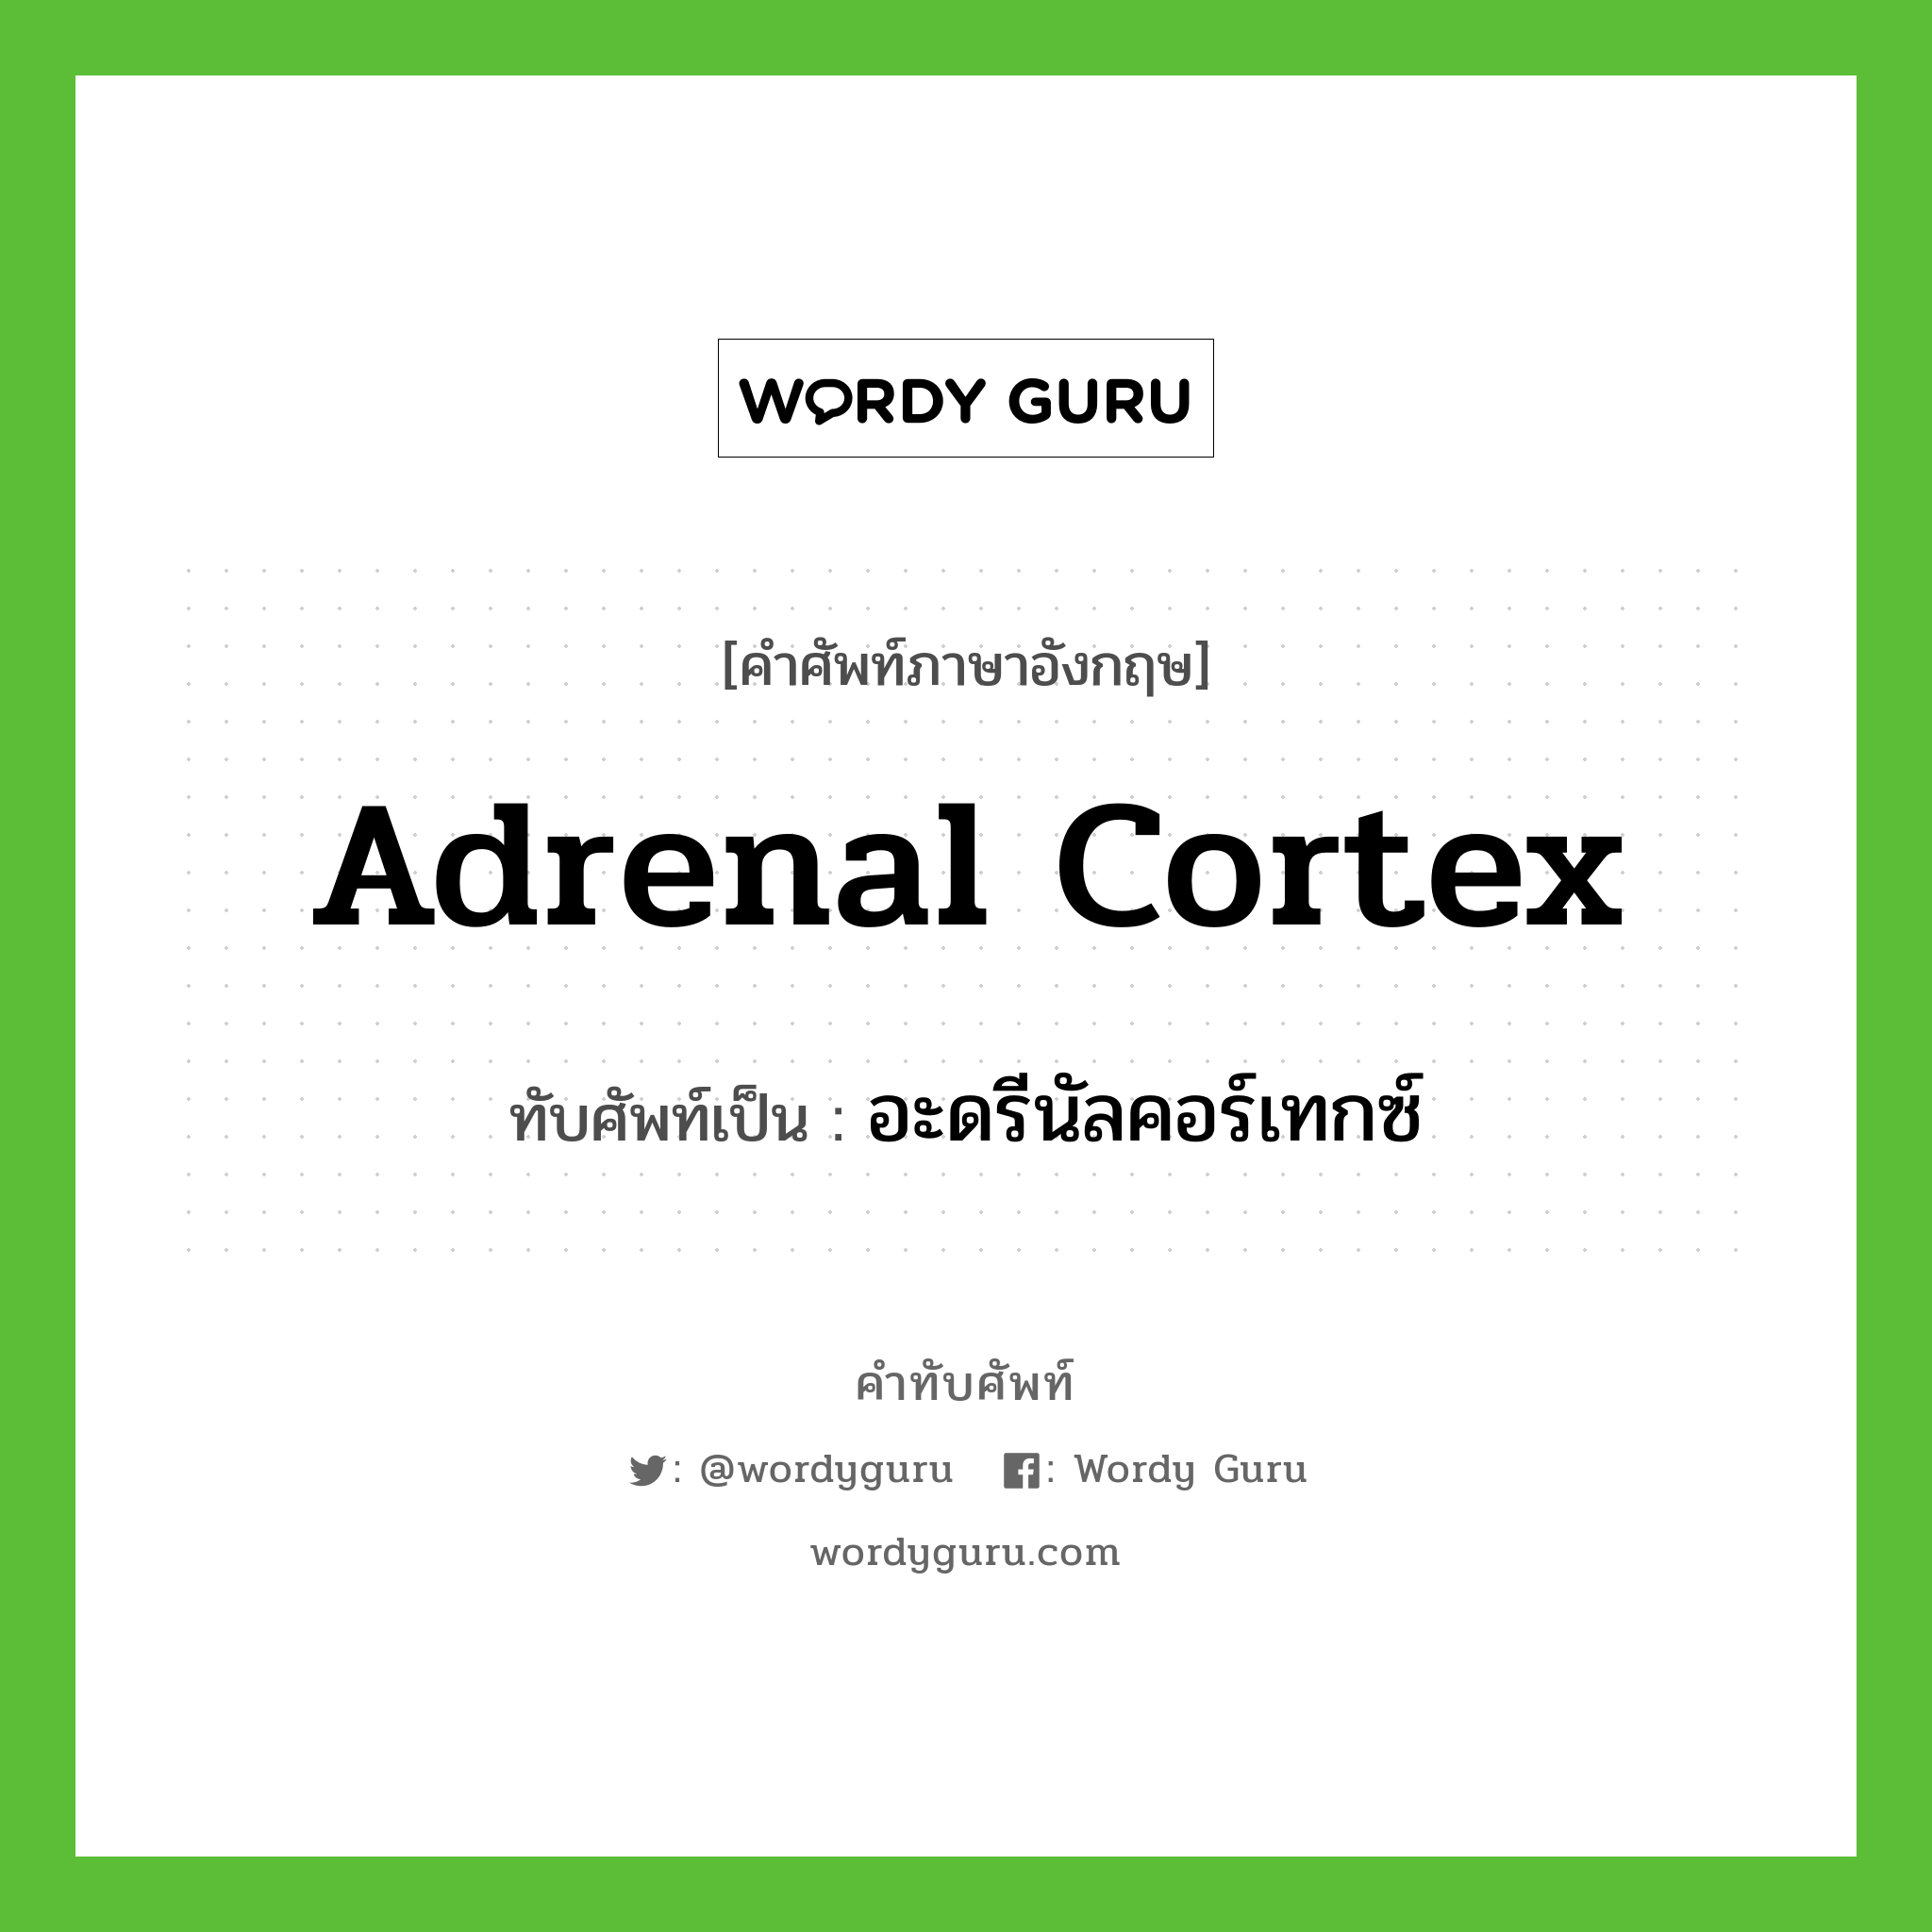 adrenal cortex เขียนเป็นคำไทยว่าอะไร?, คำศัพท์ภาษาอังกฤษ adrenal cortex ทับศัพท์เป็น อะดรีนัลคอร์เทกซ์